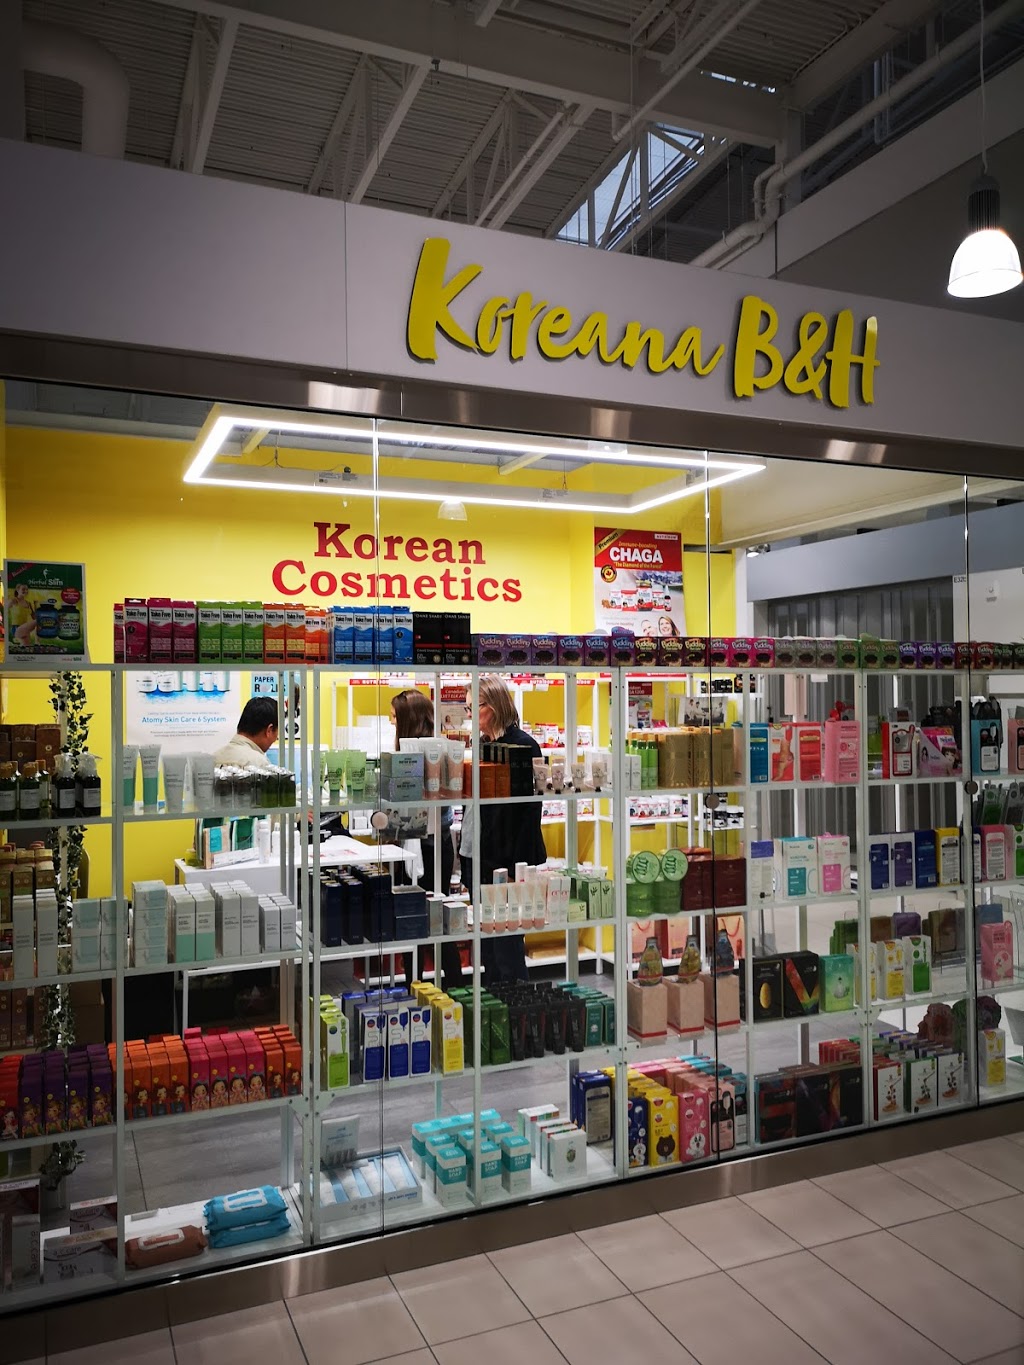 Korean Cosmetics/Koreana B&H | Newhorizonmall, 260300 Writing Creek Cres, Balzac, AB T4A 0X8, Canada